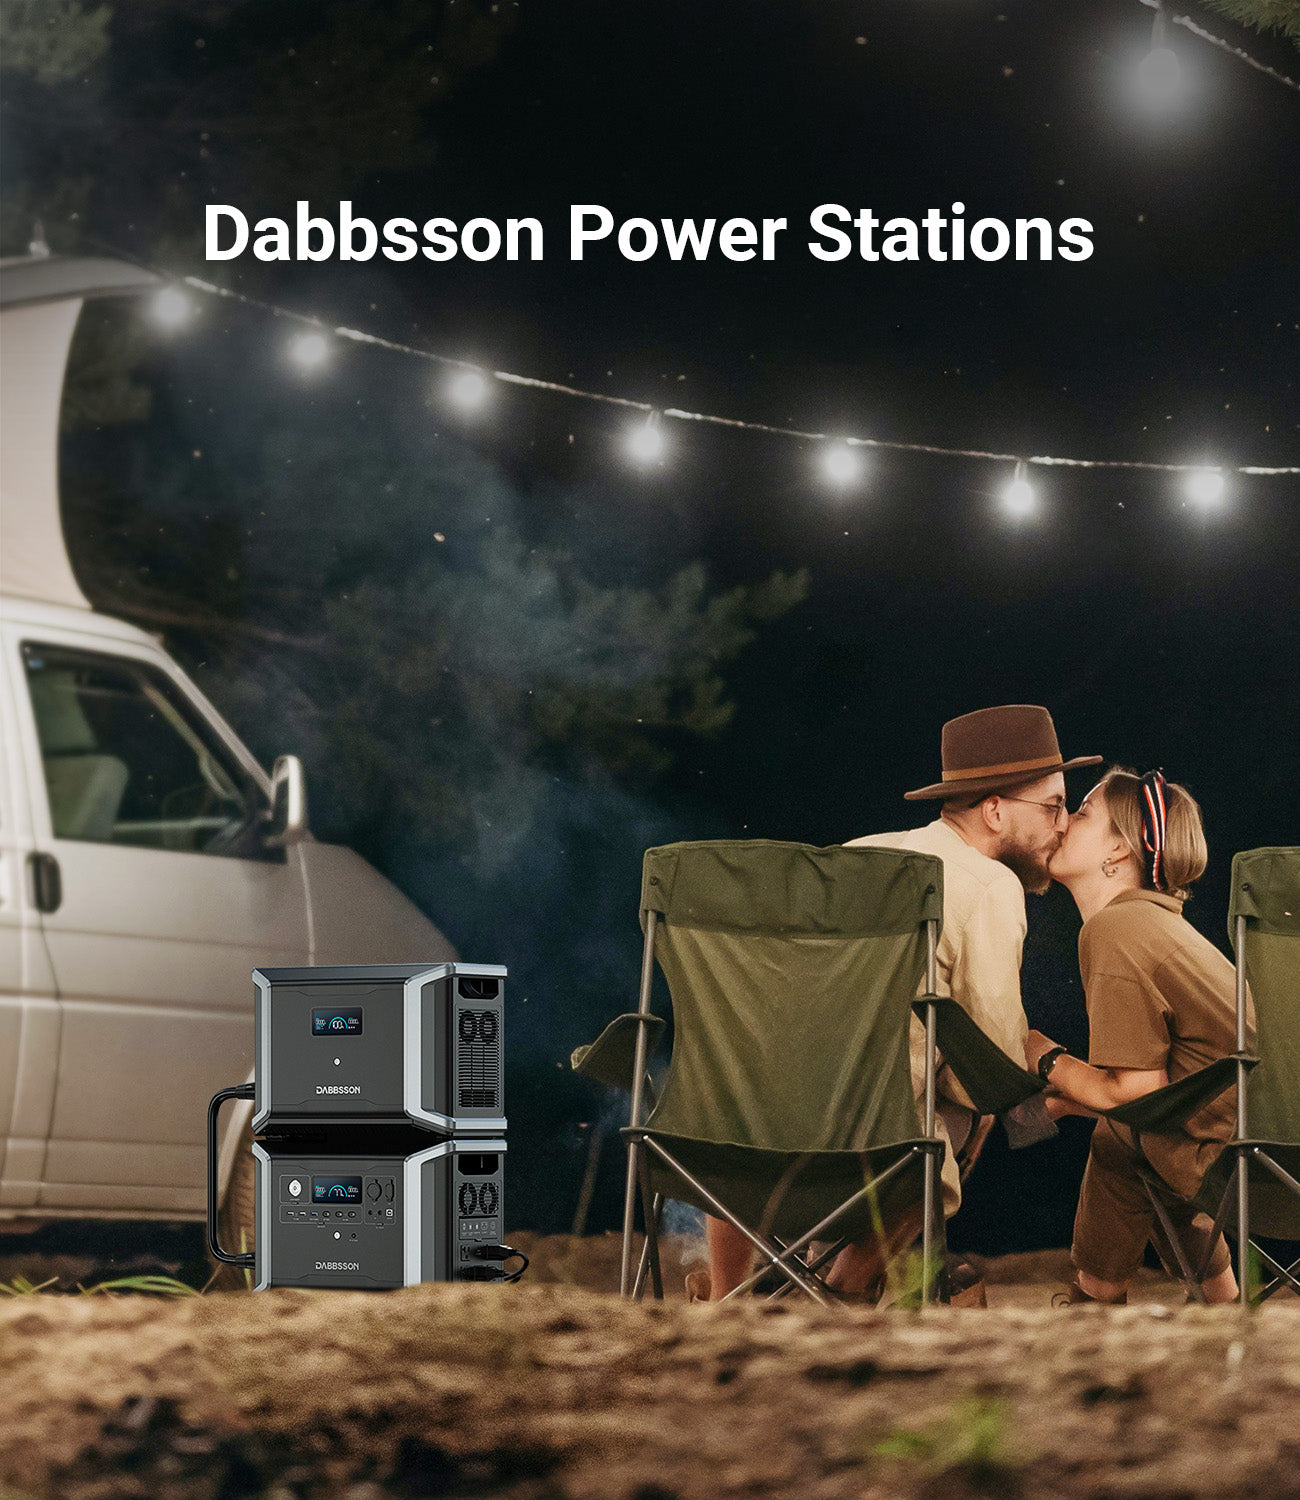 Dabbsson DBS2300 + DBS3000B Erweiterbarer Akku - 5330Wh